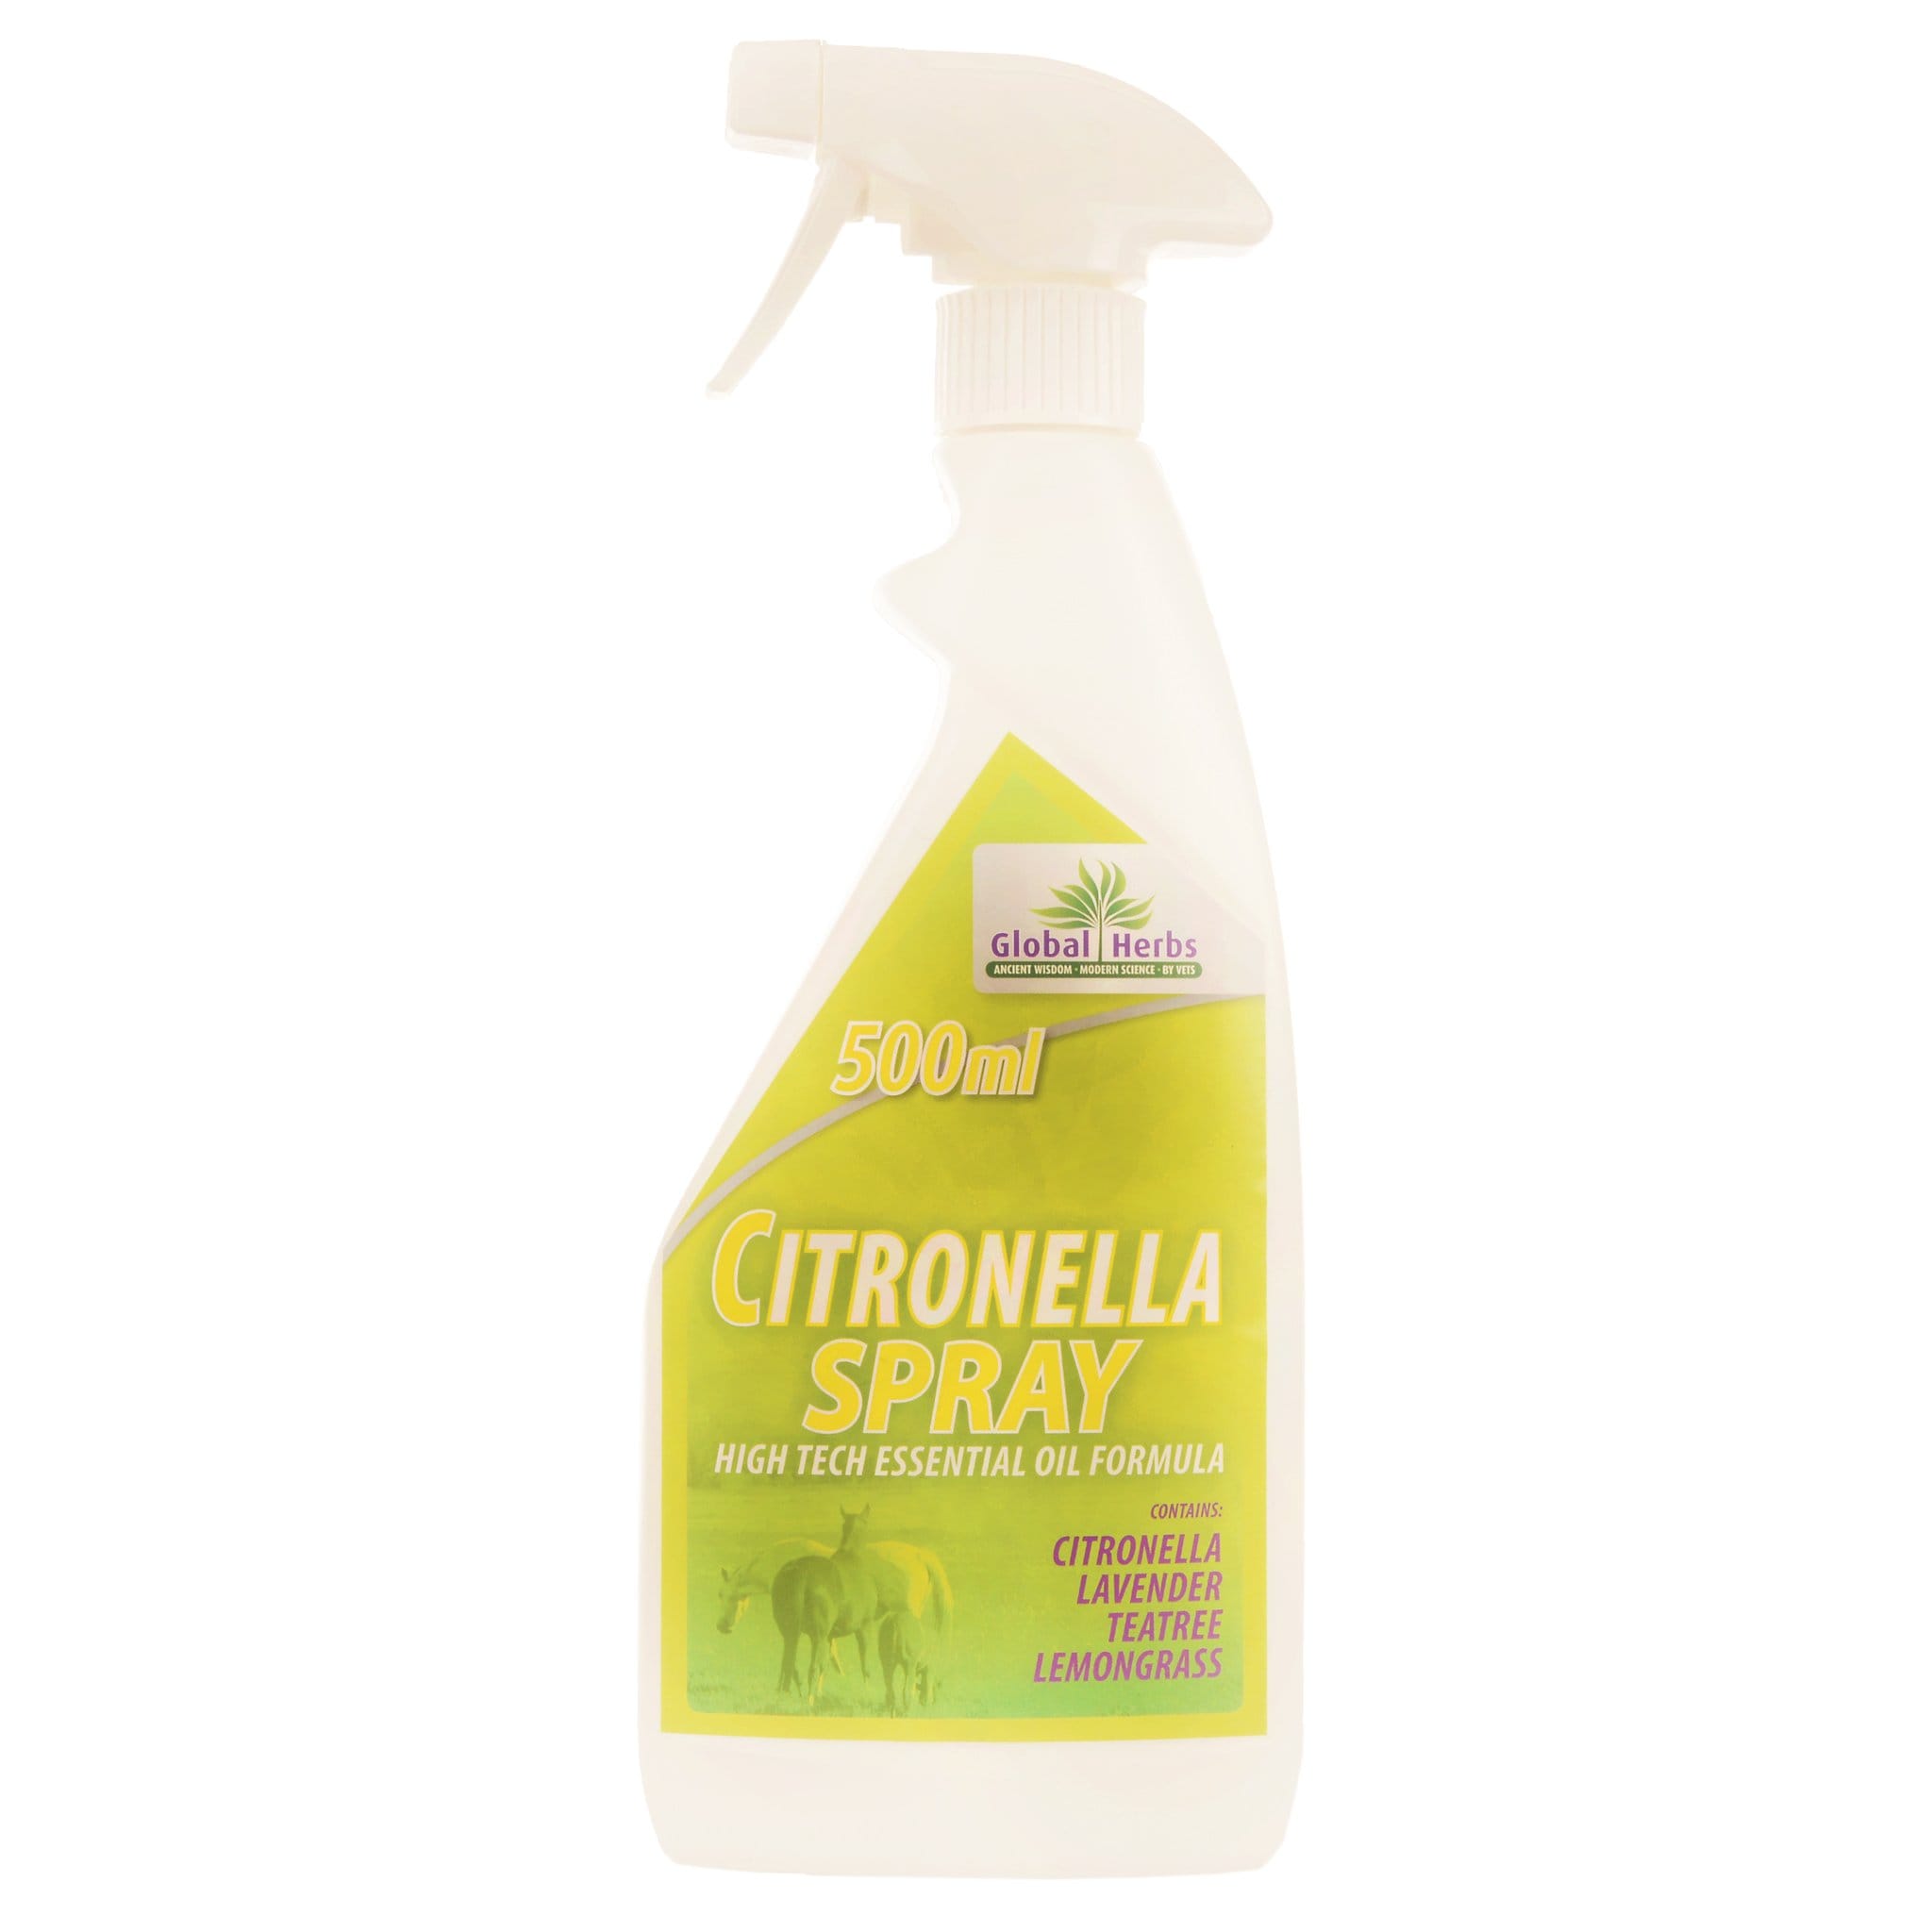 Global Herbs Citronella Spray GLB0145